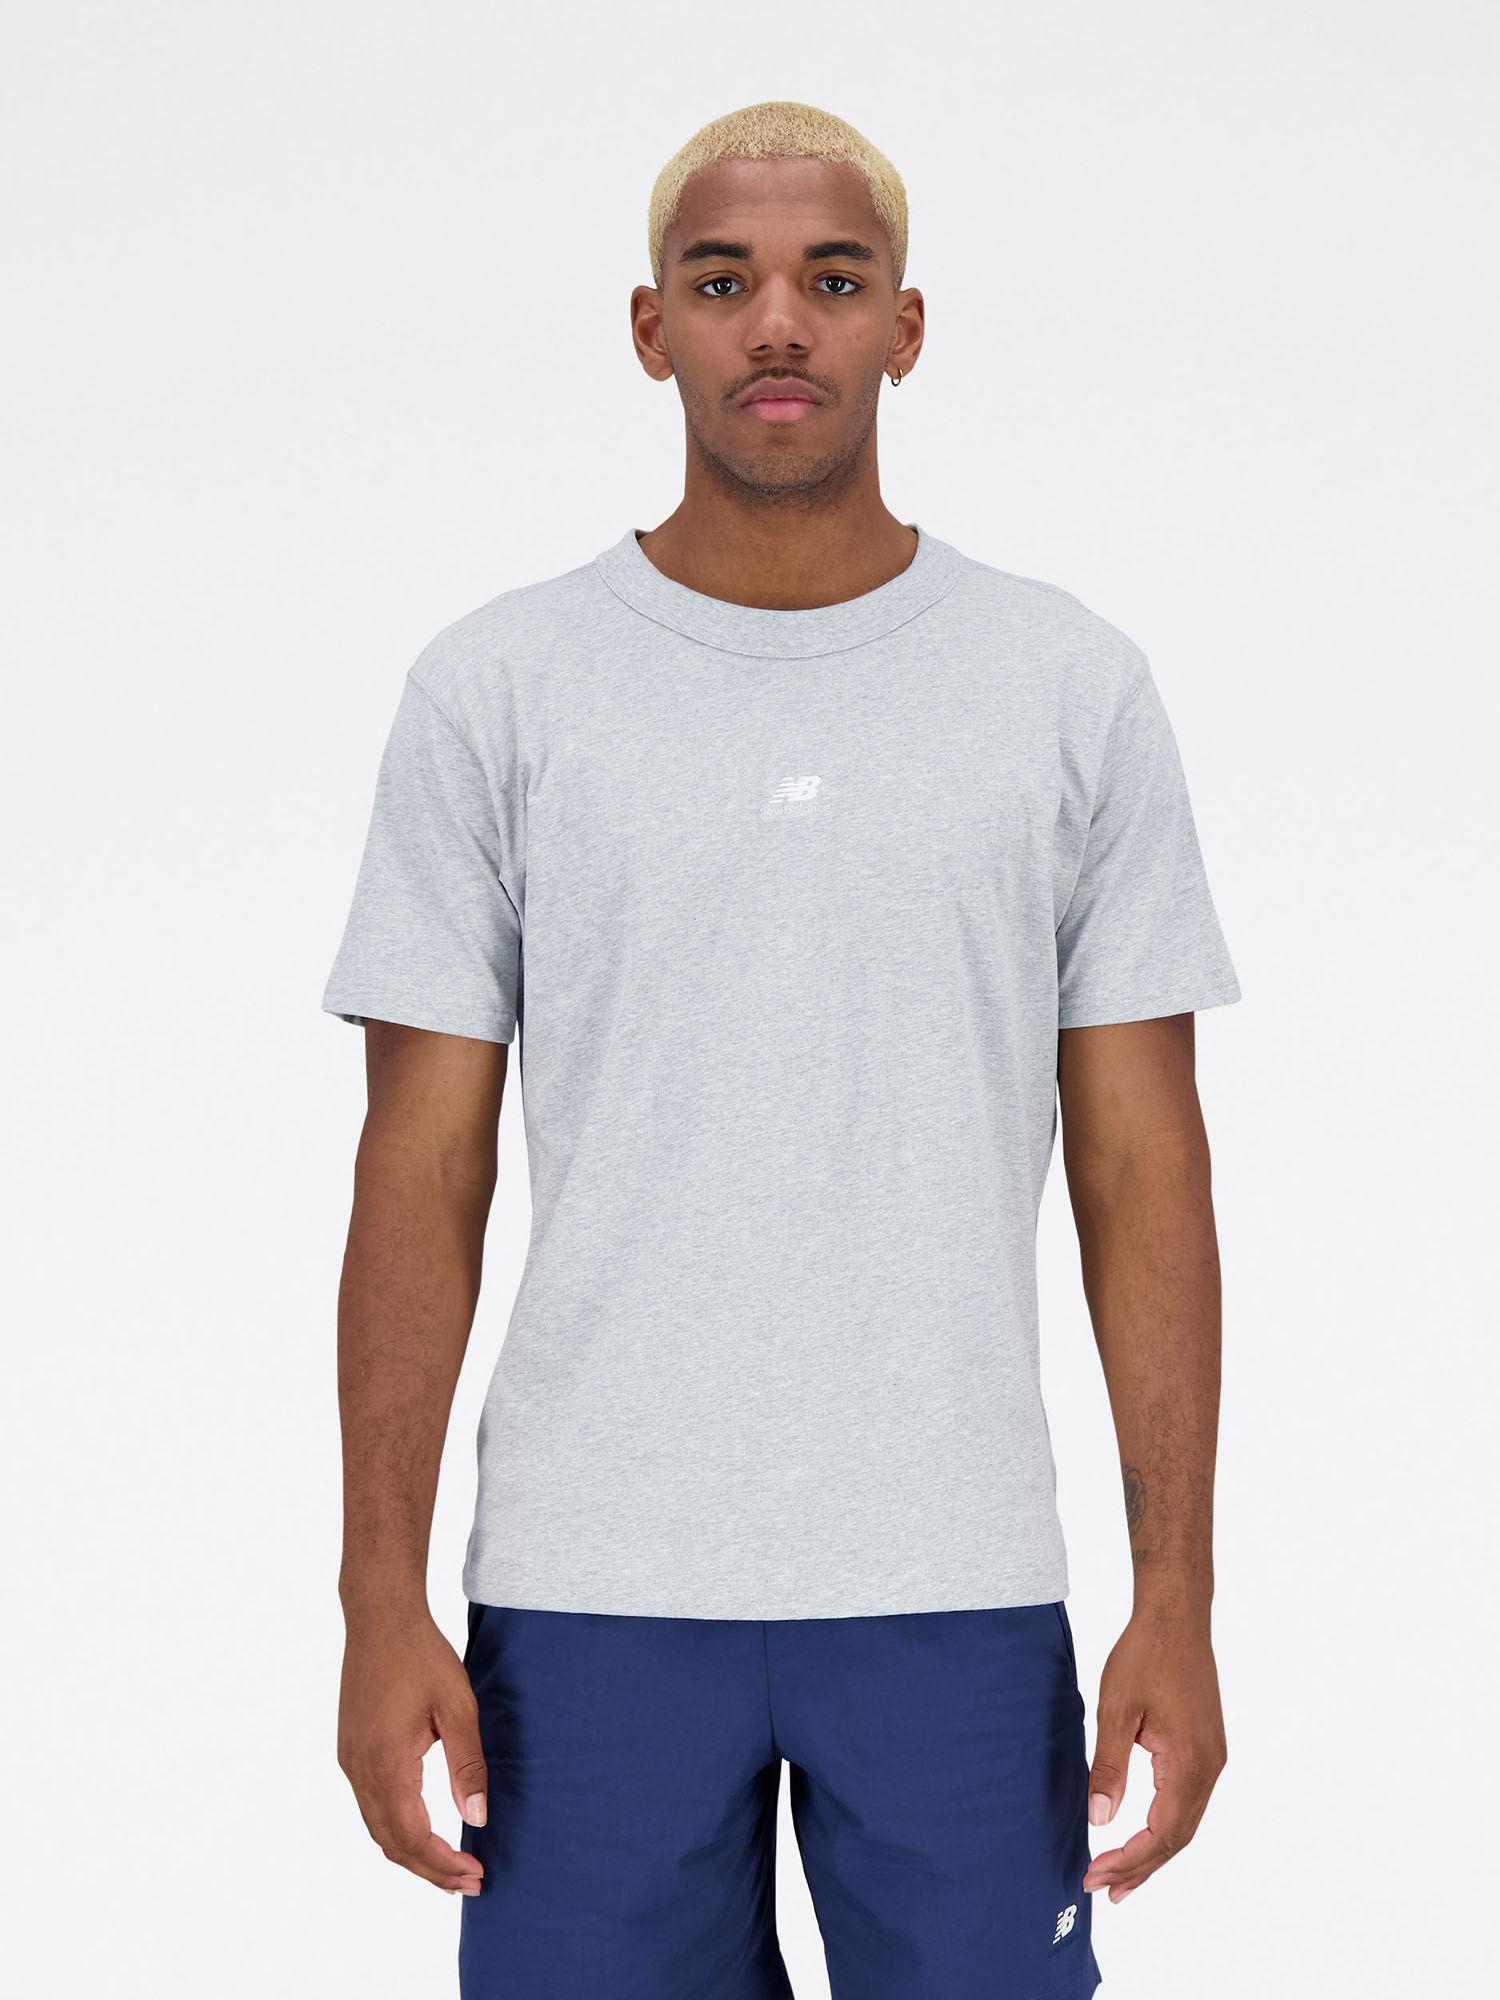 mens-athletic-grey-round-neck-t-shirt